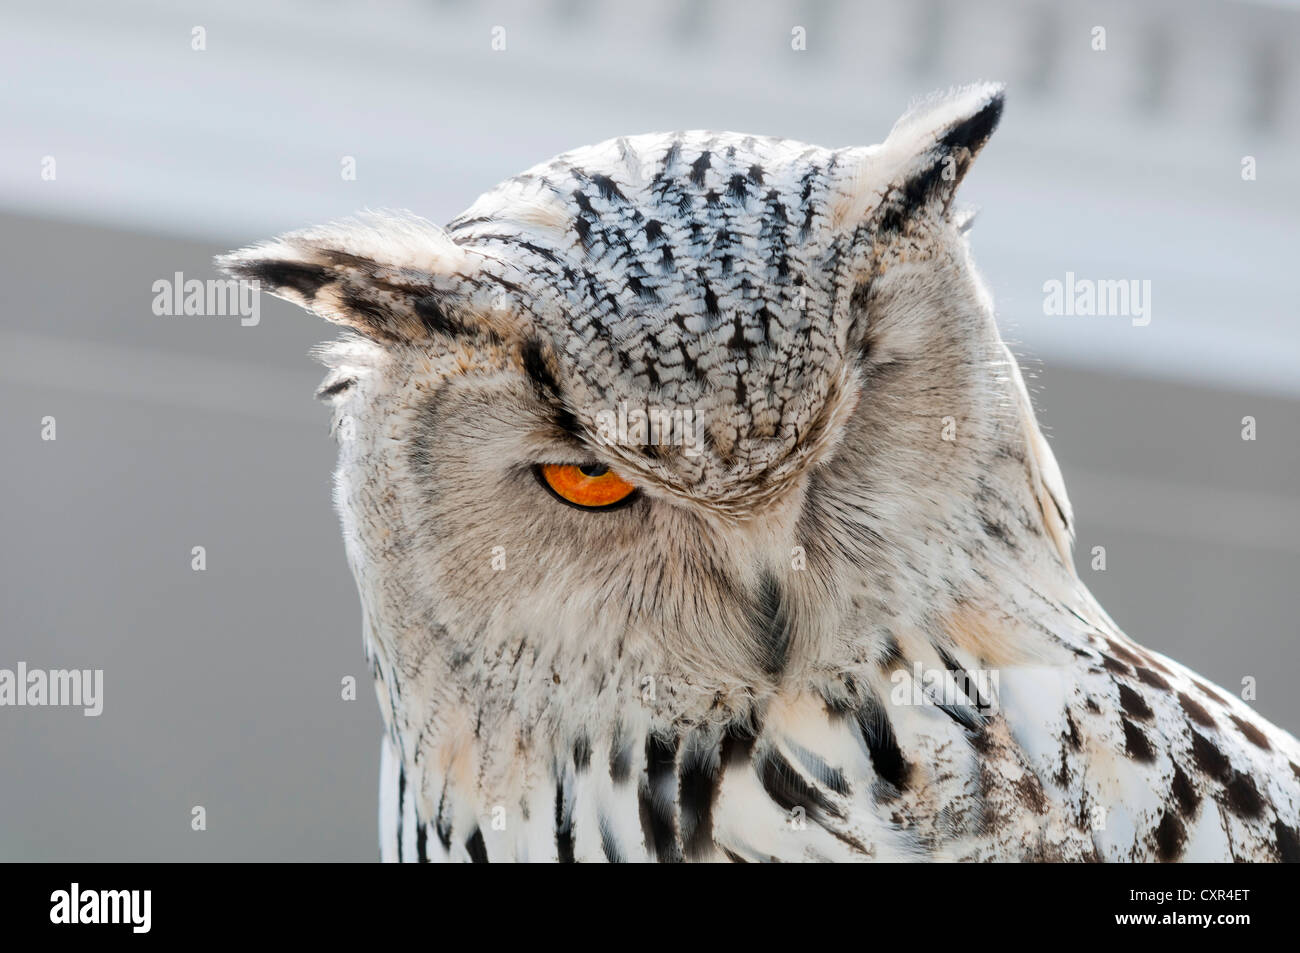 Snowy Owl (Nyctea scandiaca), Foto-Siegel photo exhibition, Erfurt, Thuringia, Germany, Europe Stock Photo